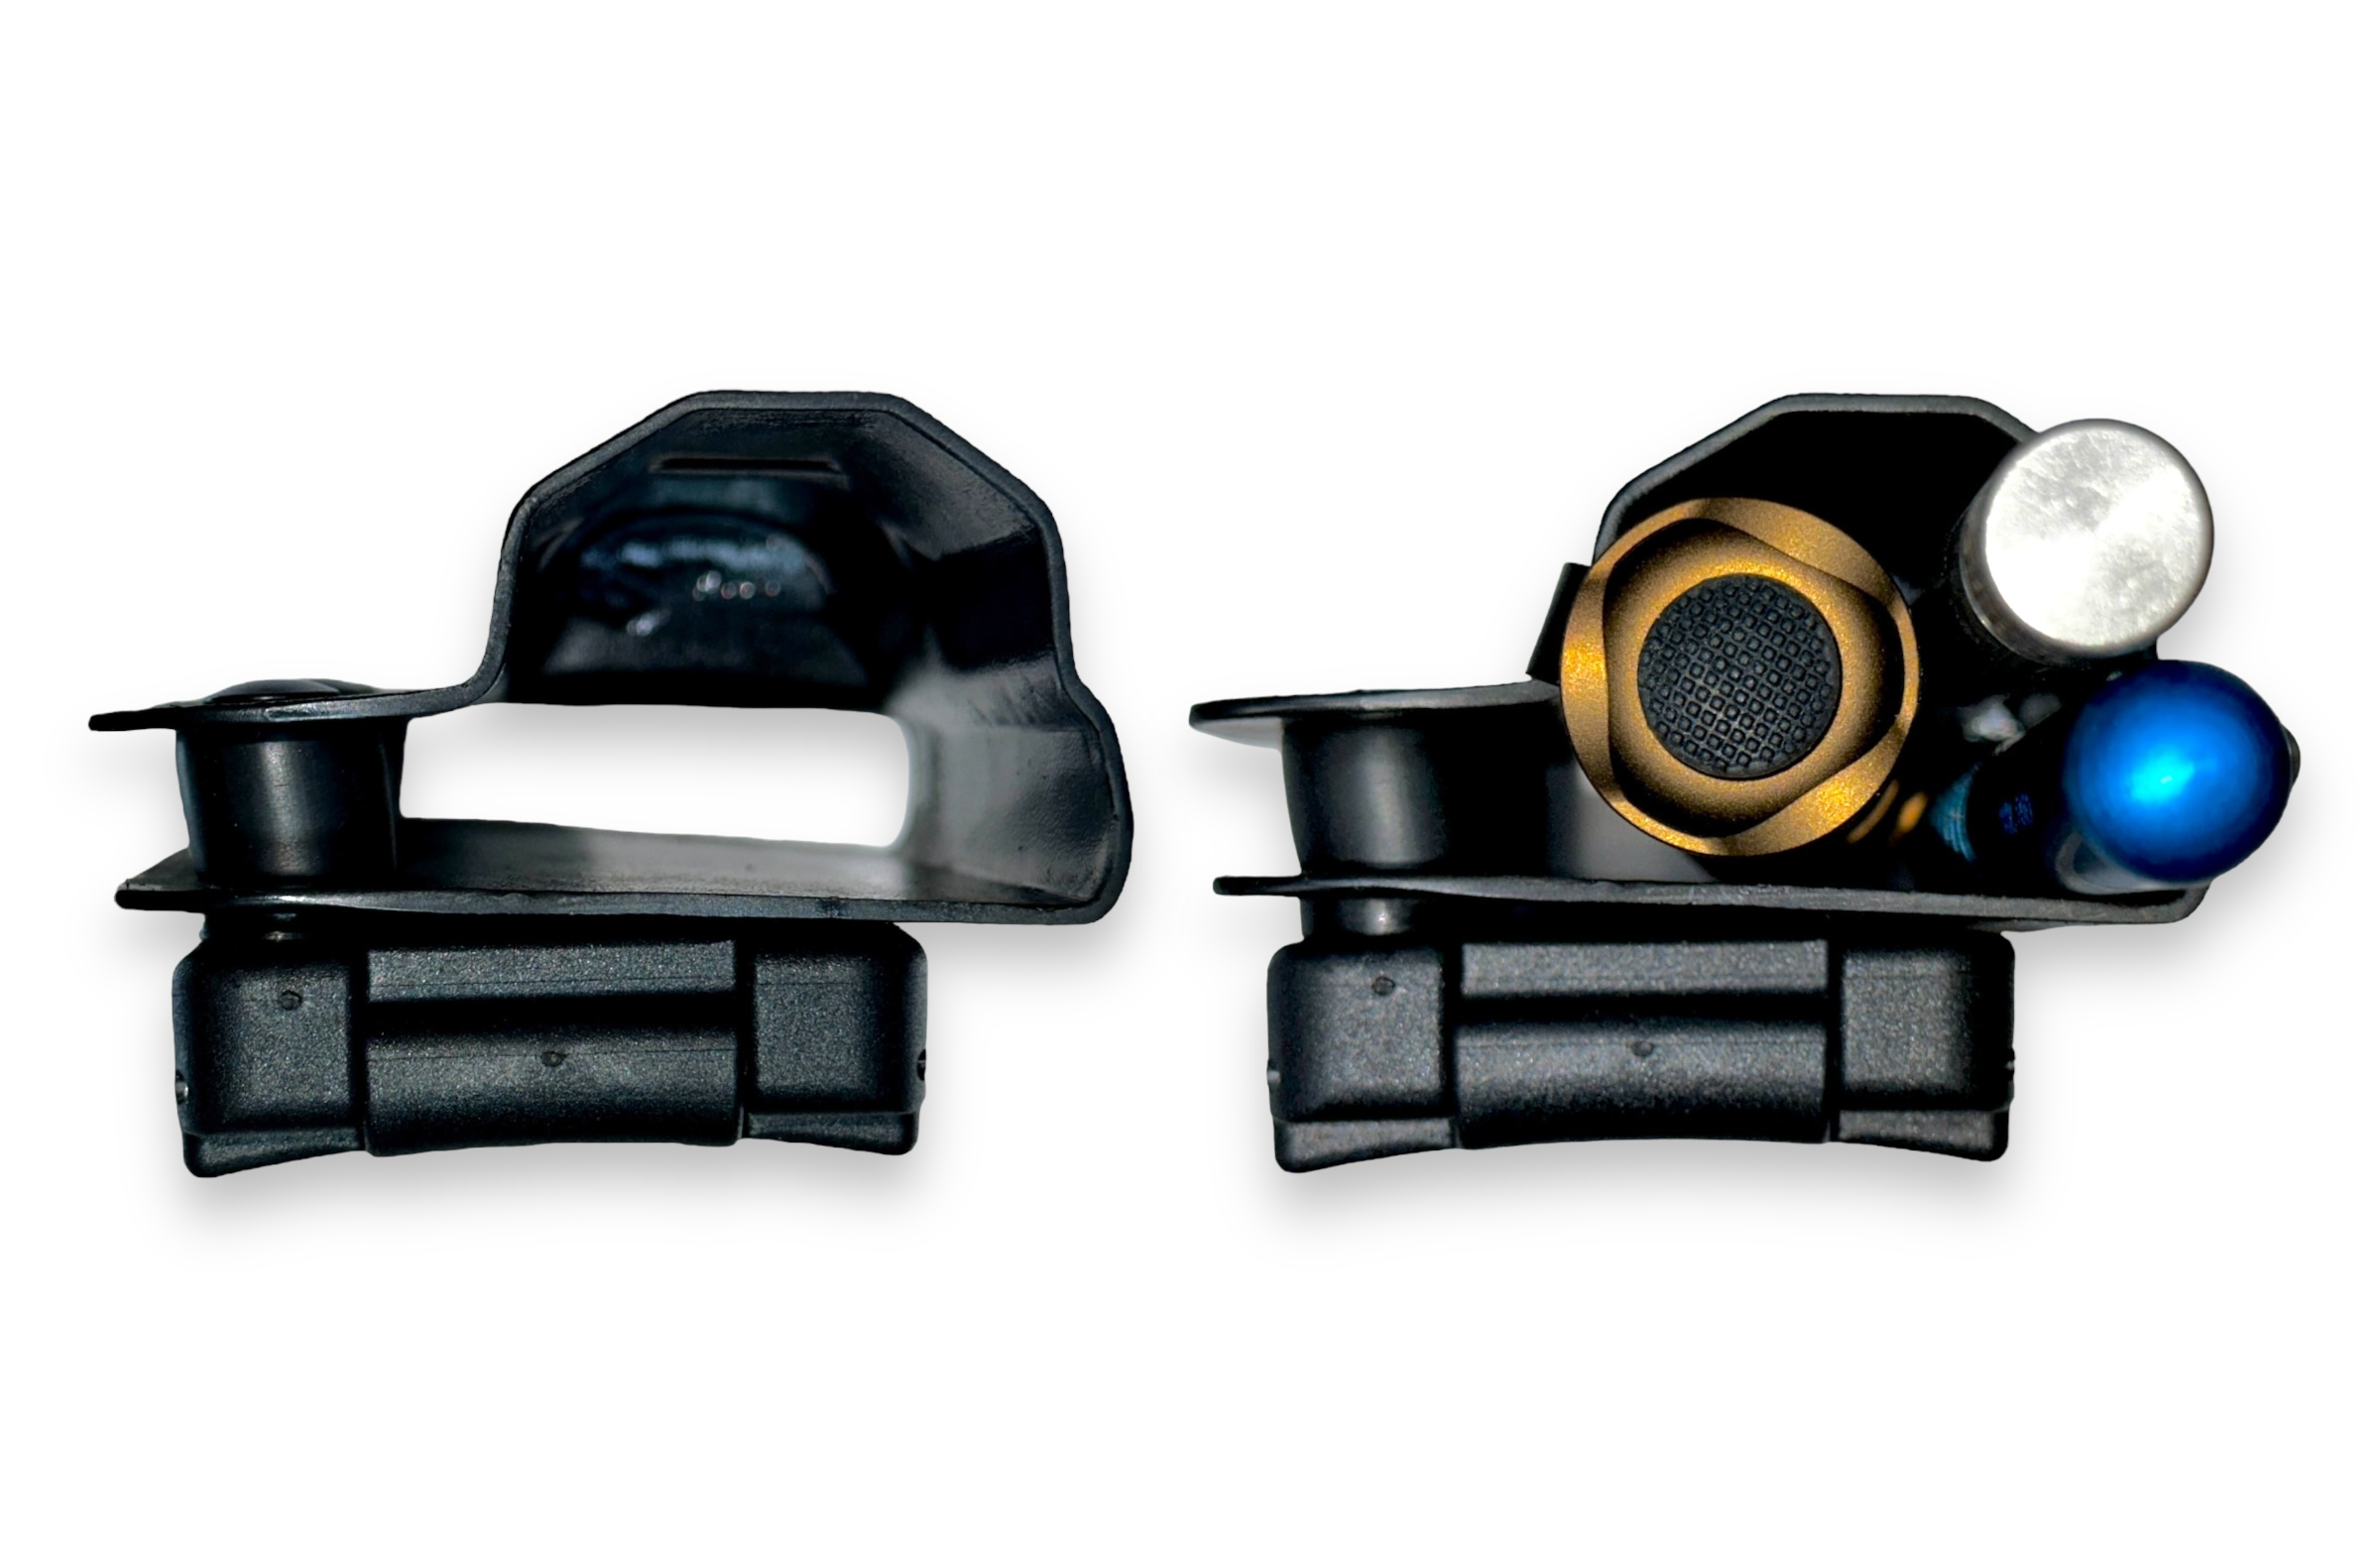 Universal Flashlight Kydex Holster - Molded Sheath + Adjustable Belt Lock